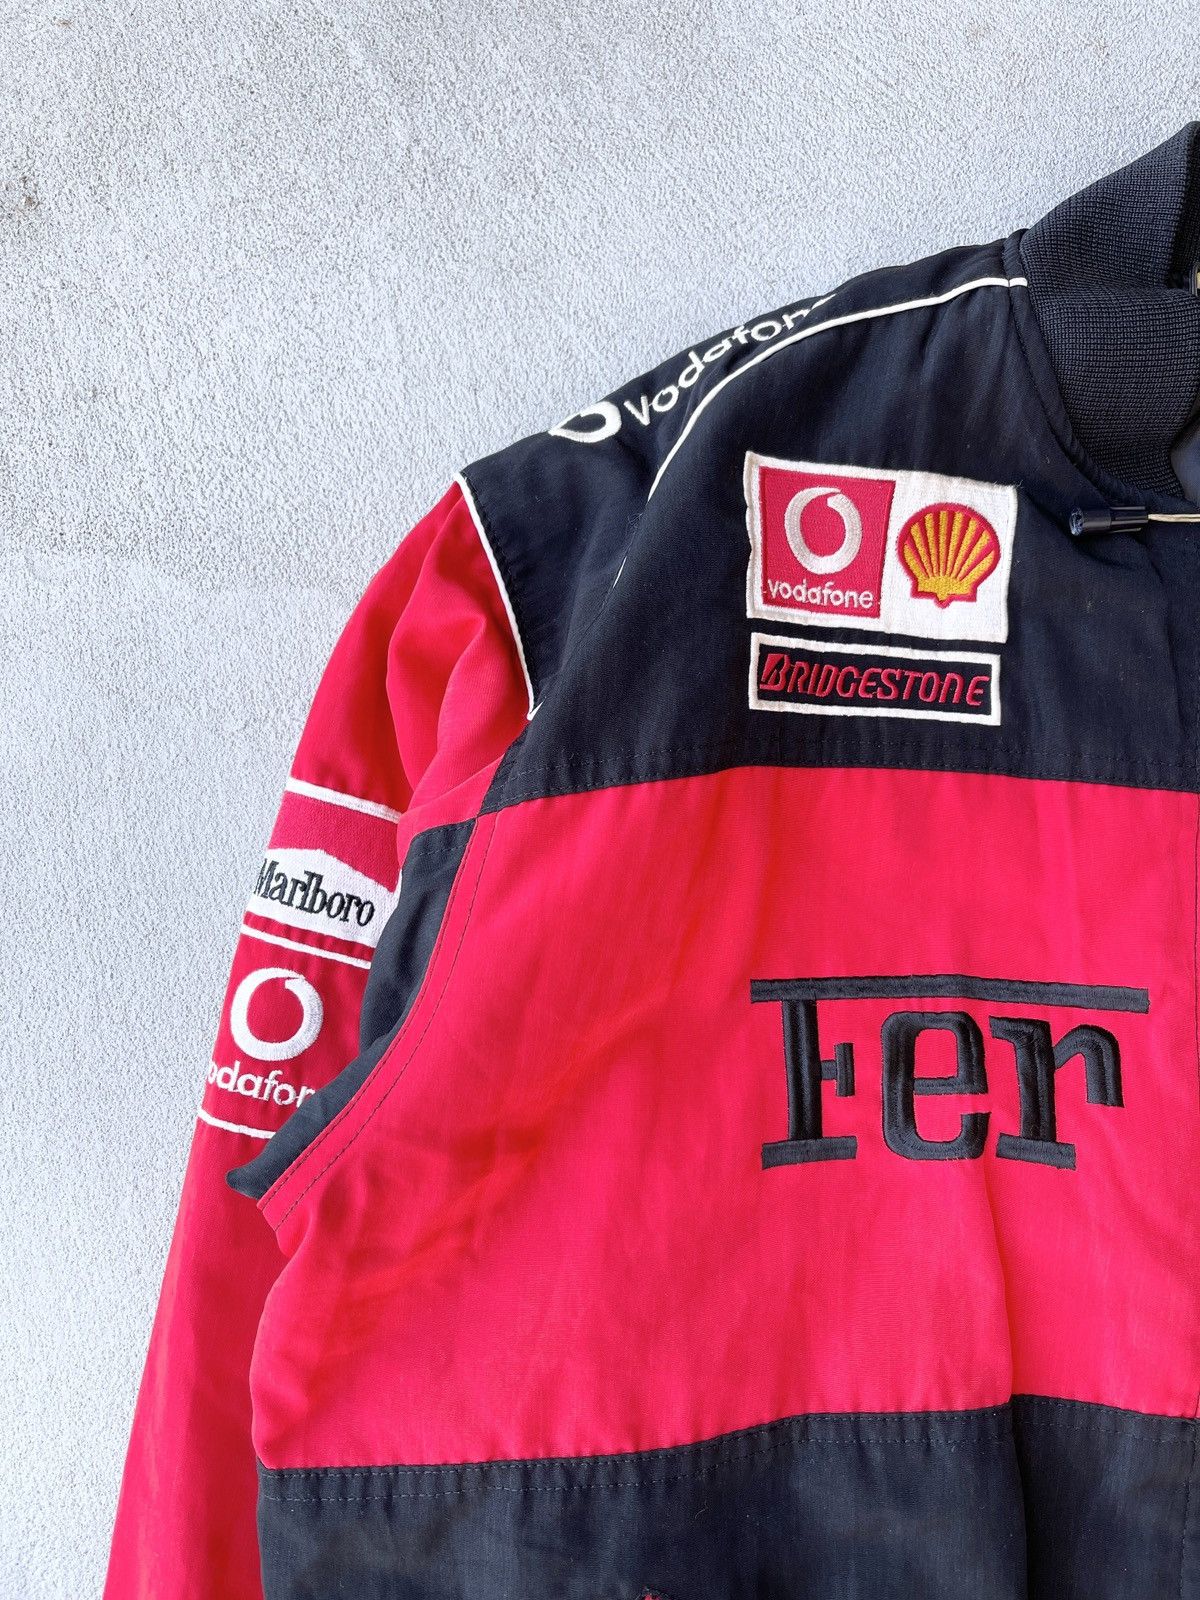 Vintage 2000s Ferrari Michael Schumacher F1 Racing Jacket - 3